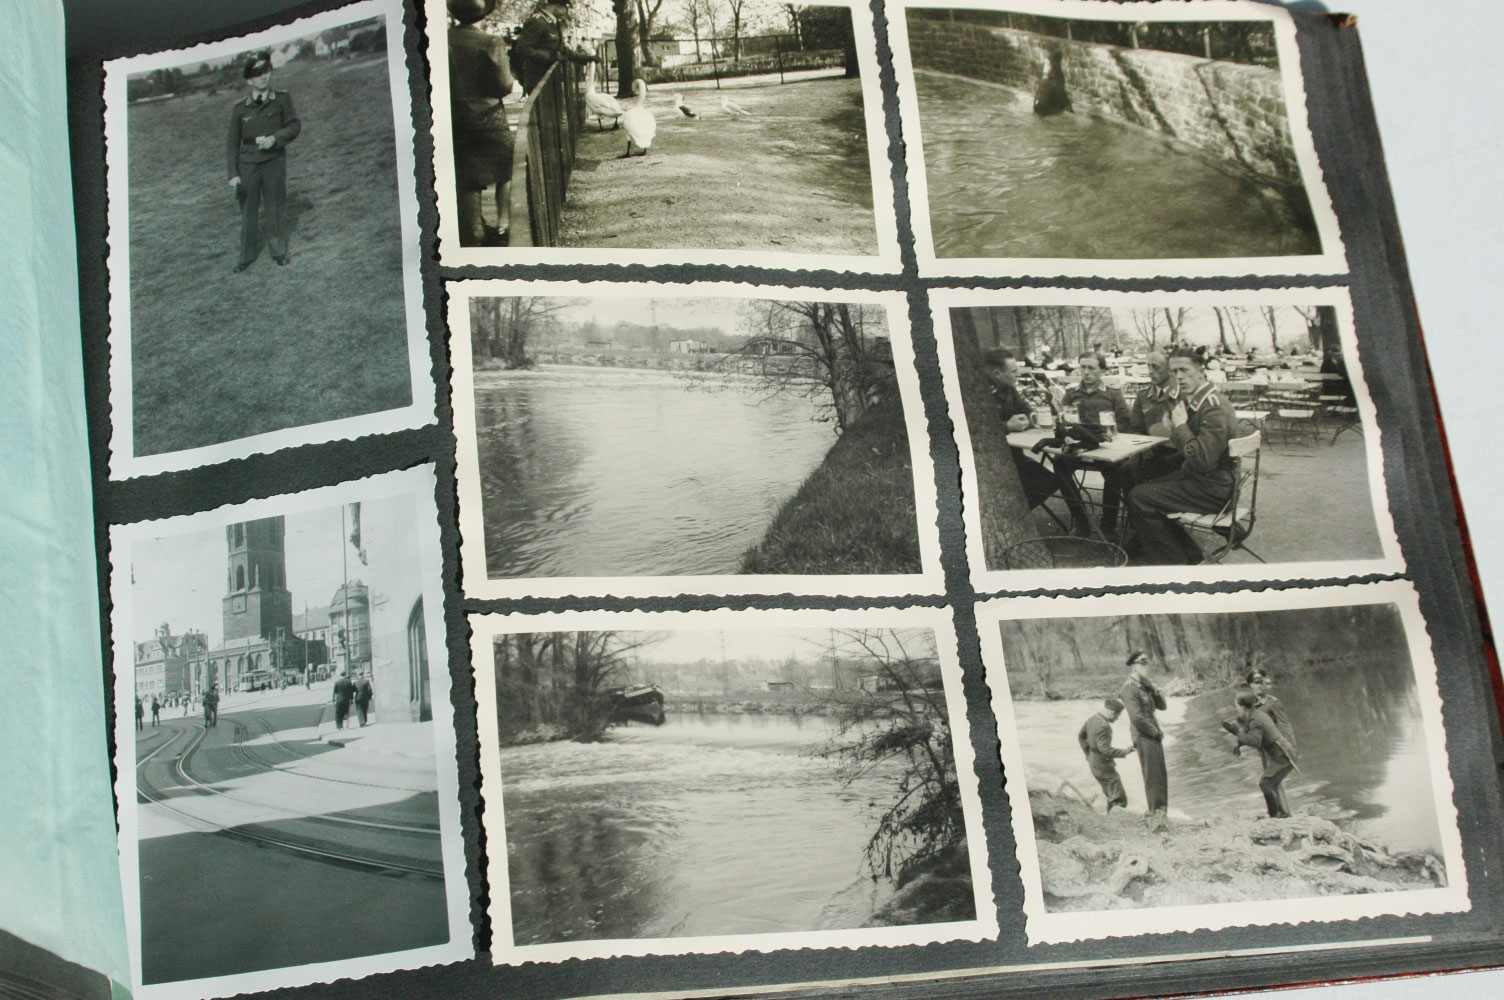 Luftwaffe Photo Album with photos of Anton Mussert (Dutch Nazi Party Leader)